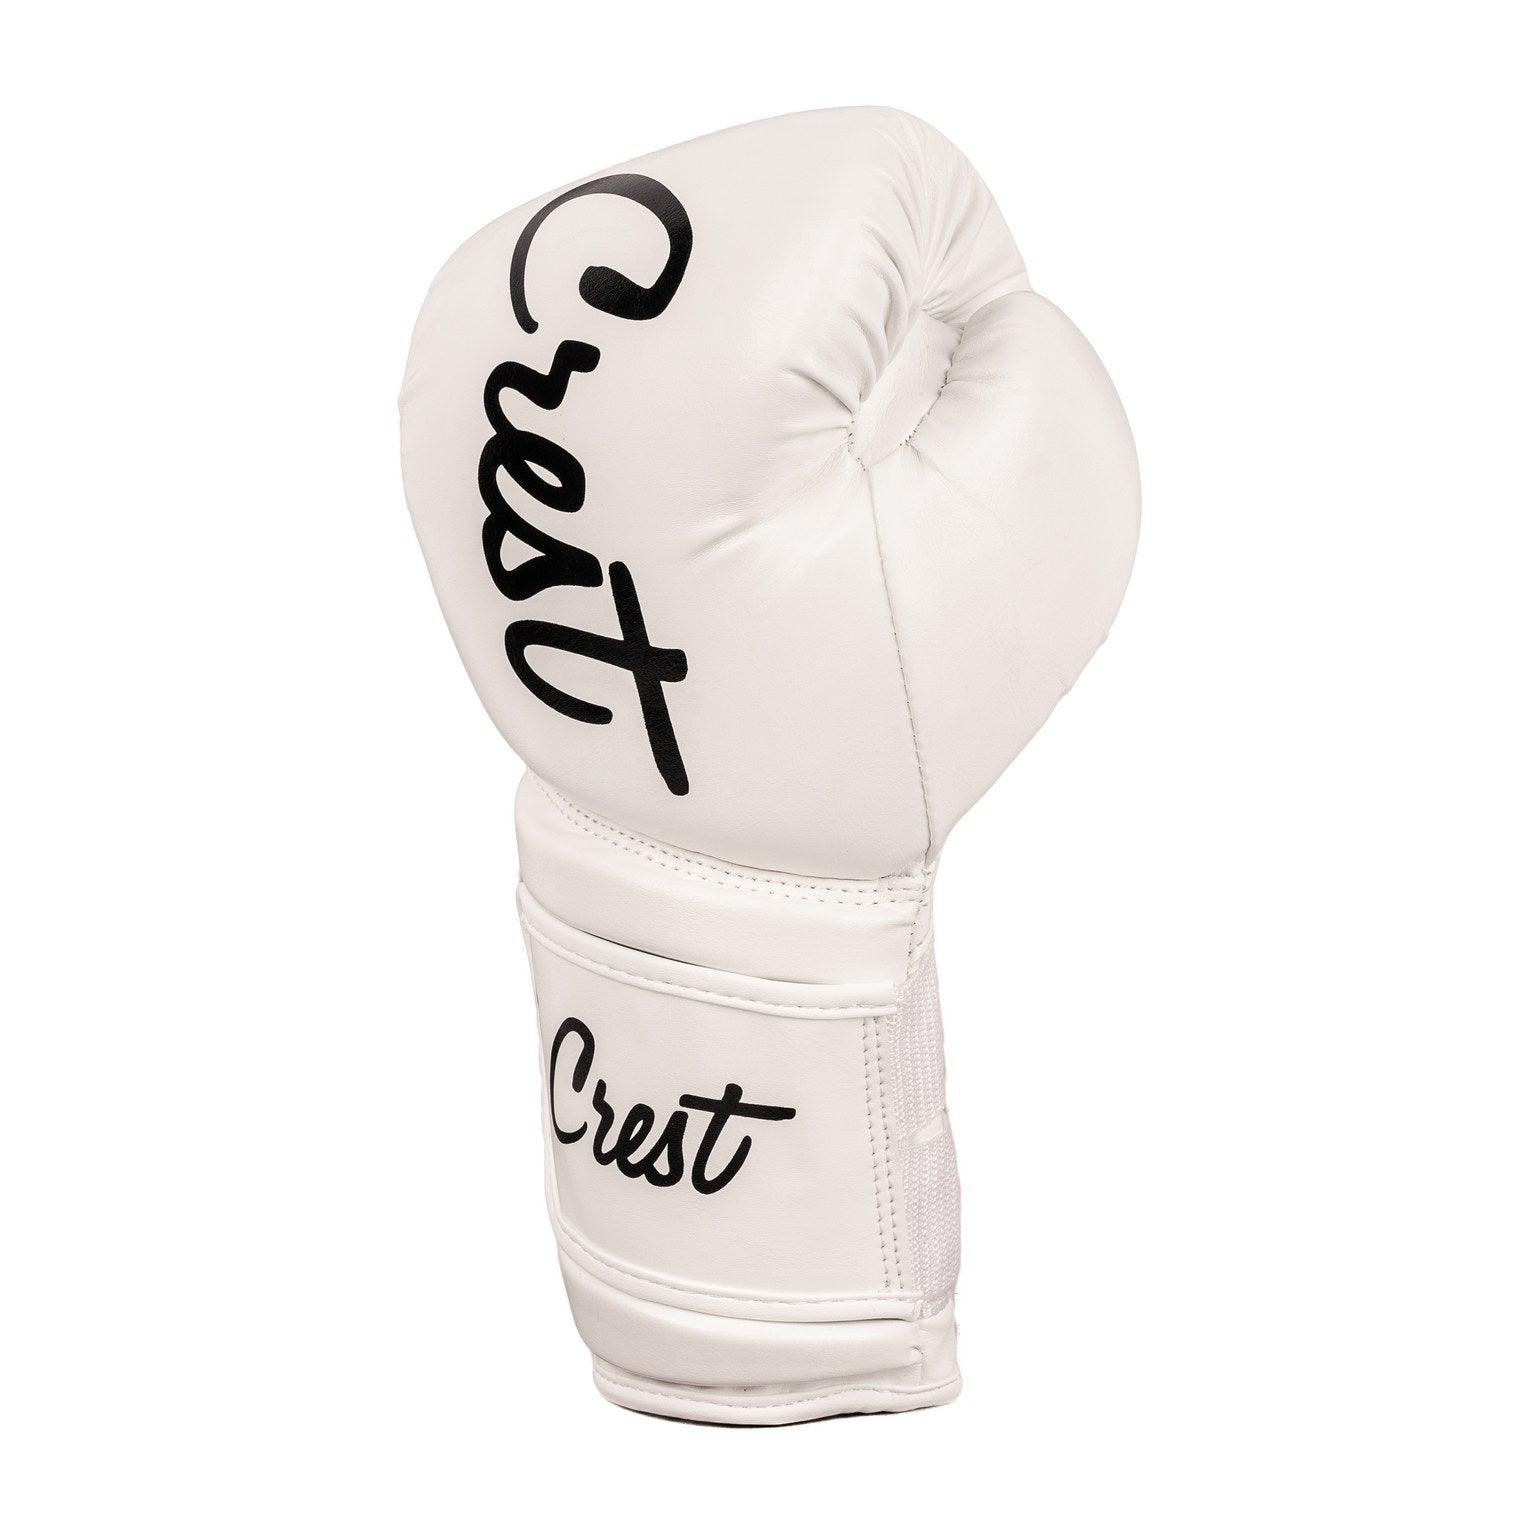 Crest Boxing Gloves "Pico 0.5" | White/Black - Crest - PFG